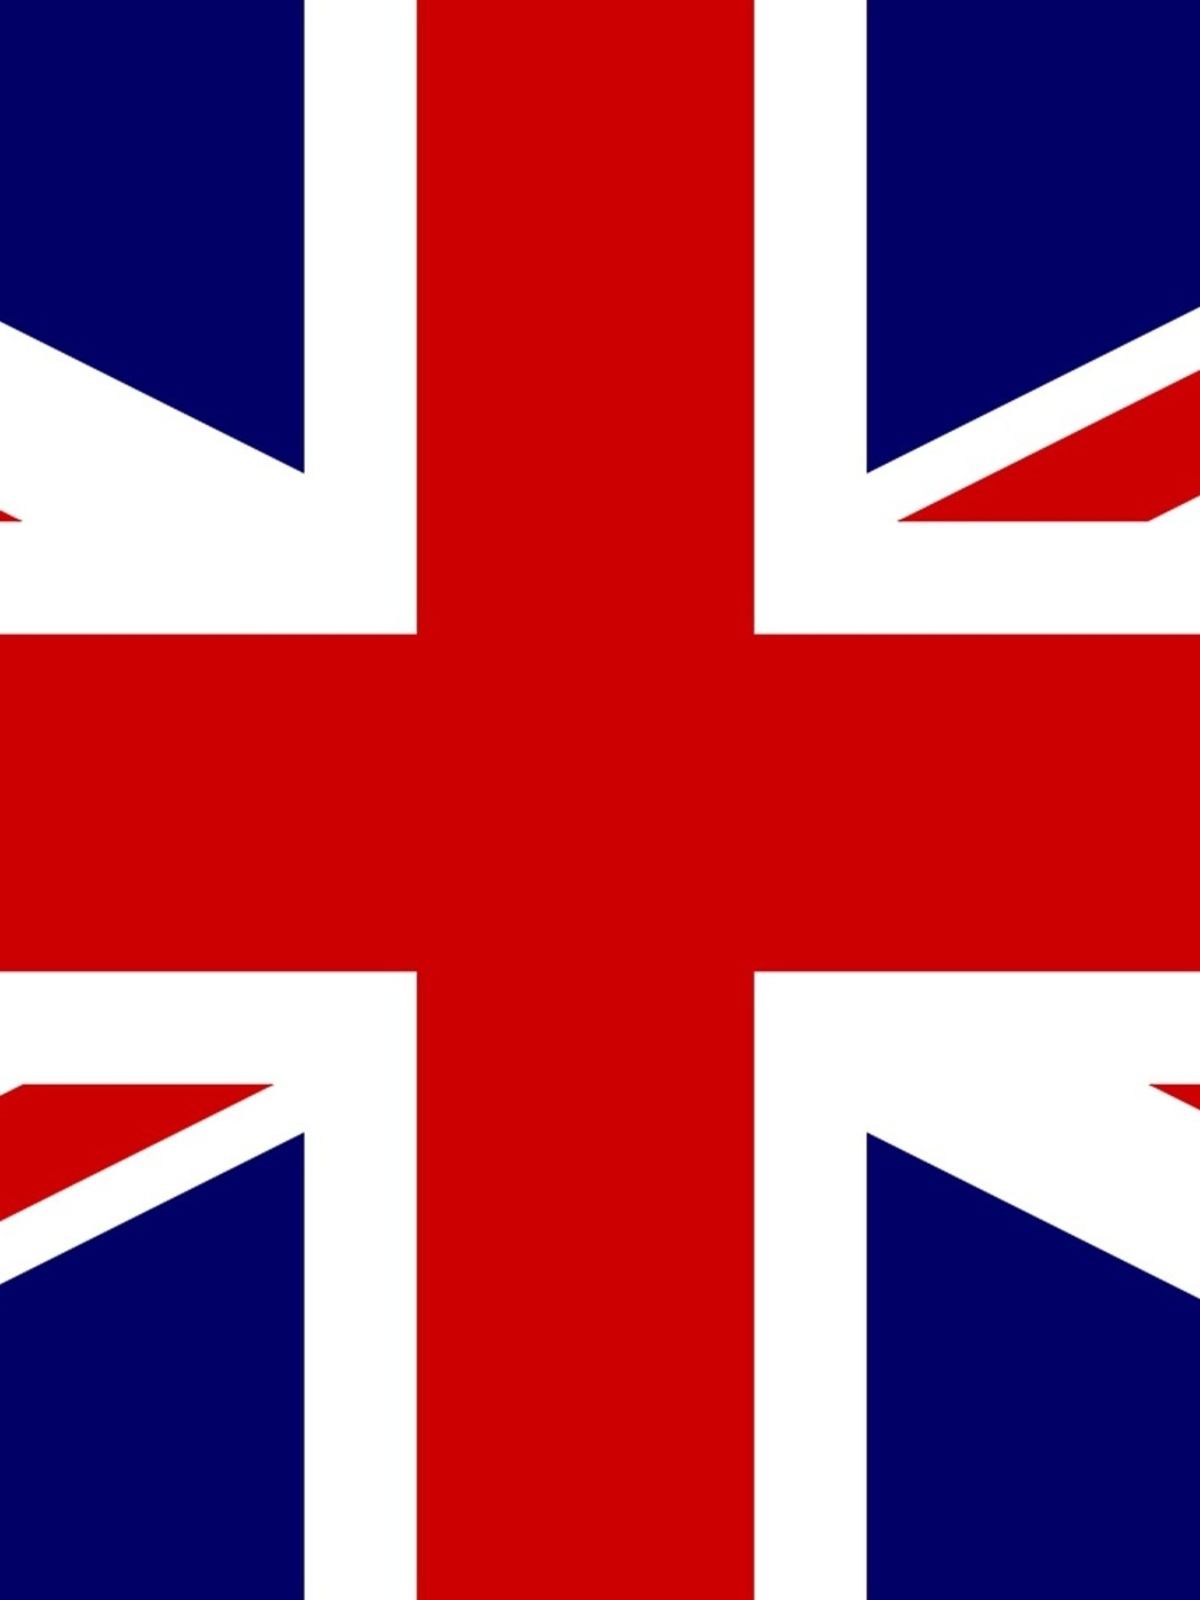 Flagge Britannien